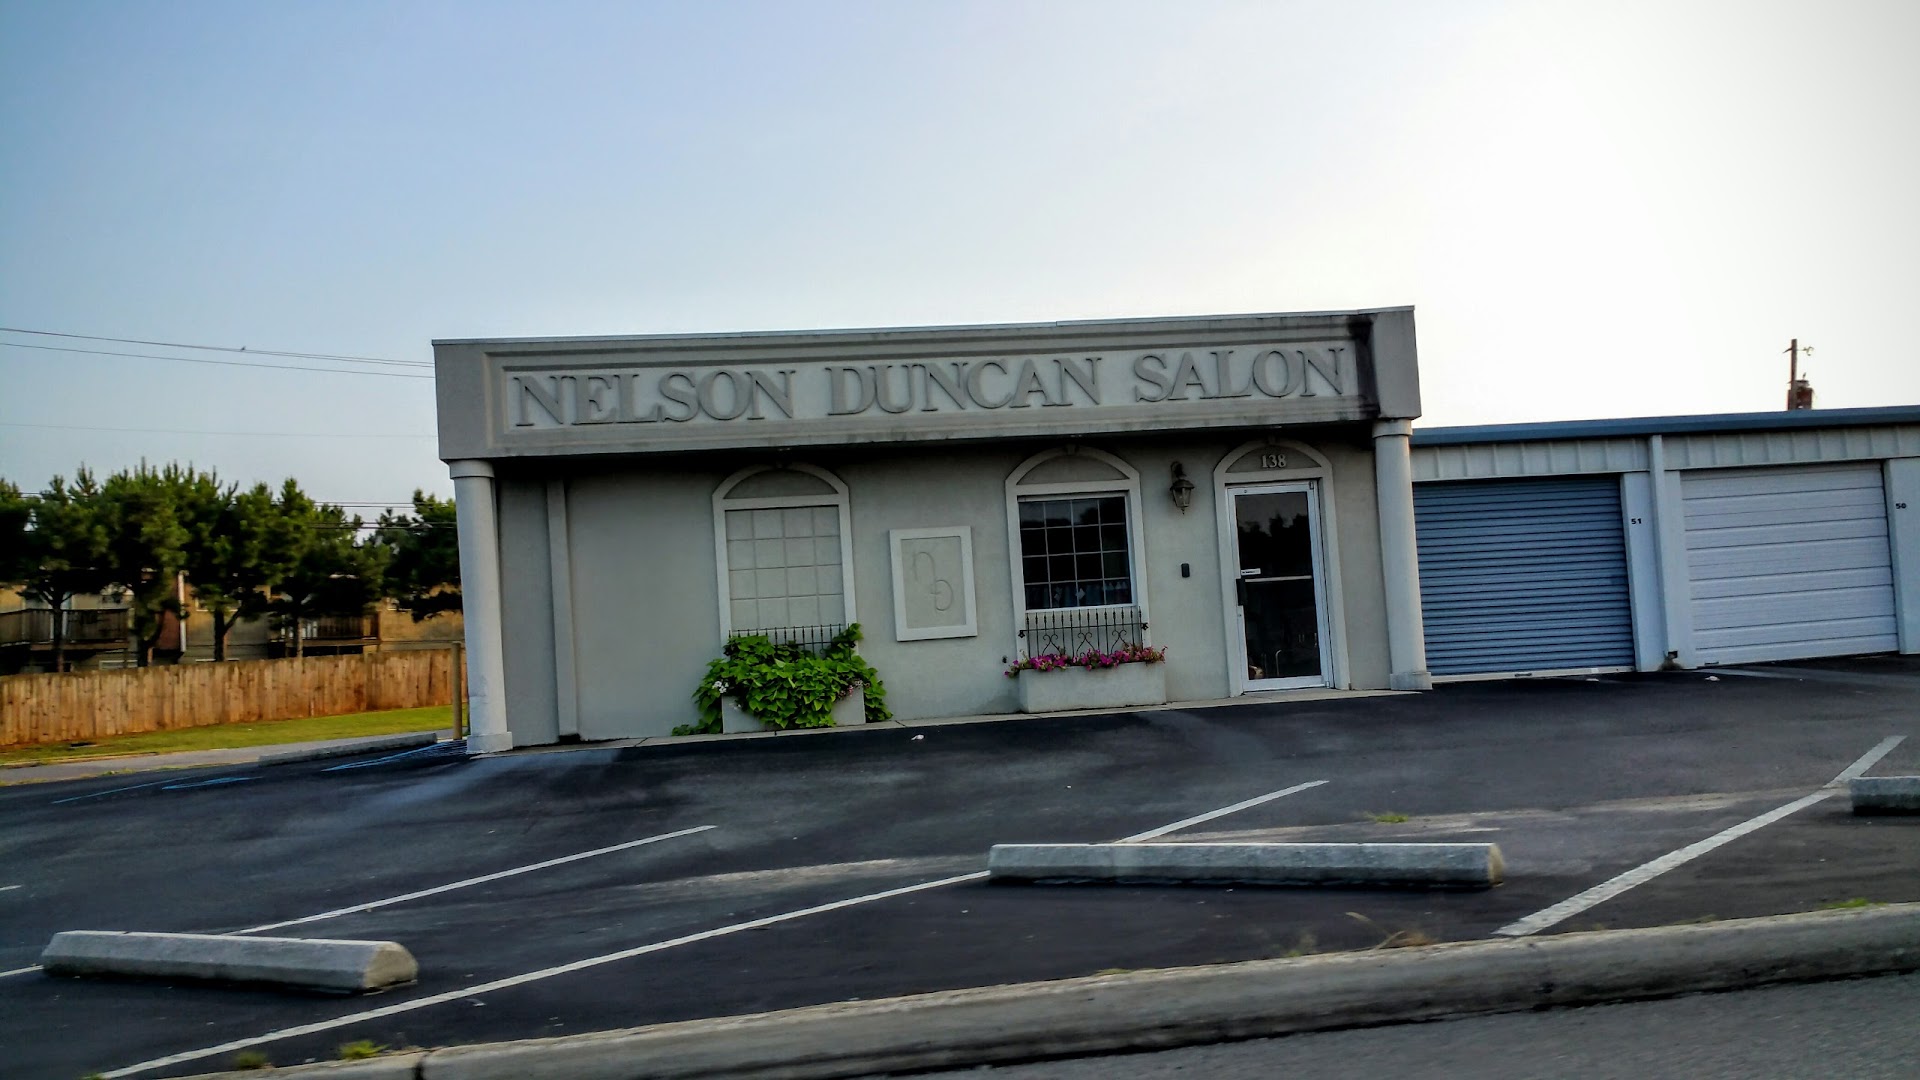 Nelson Duncan Salon